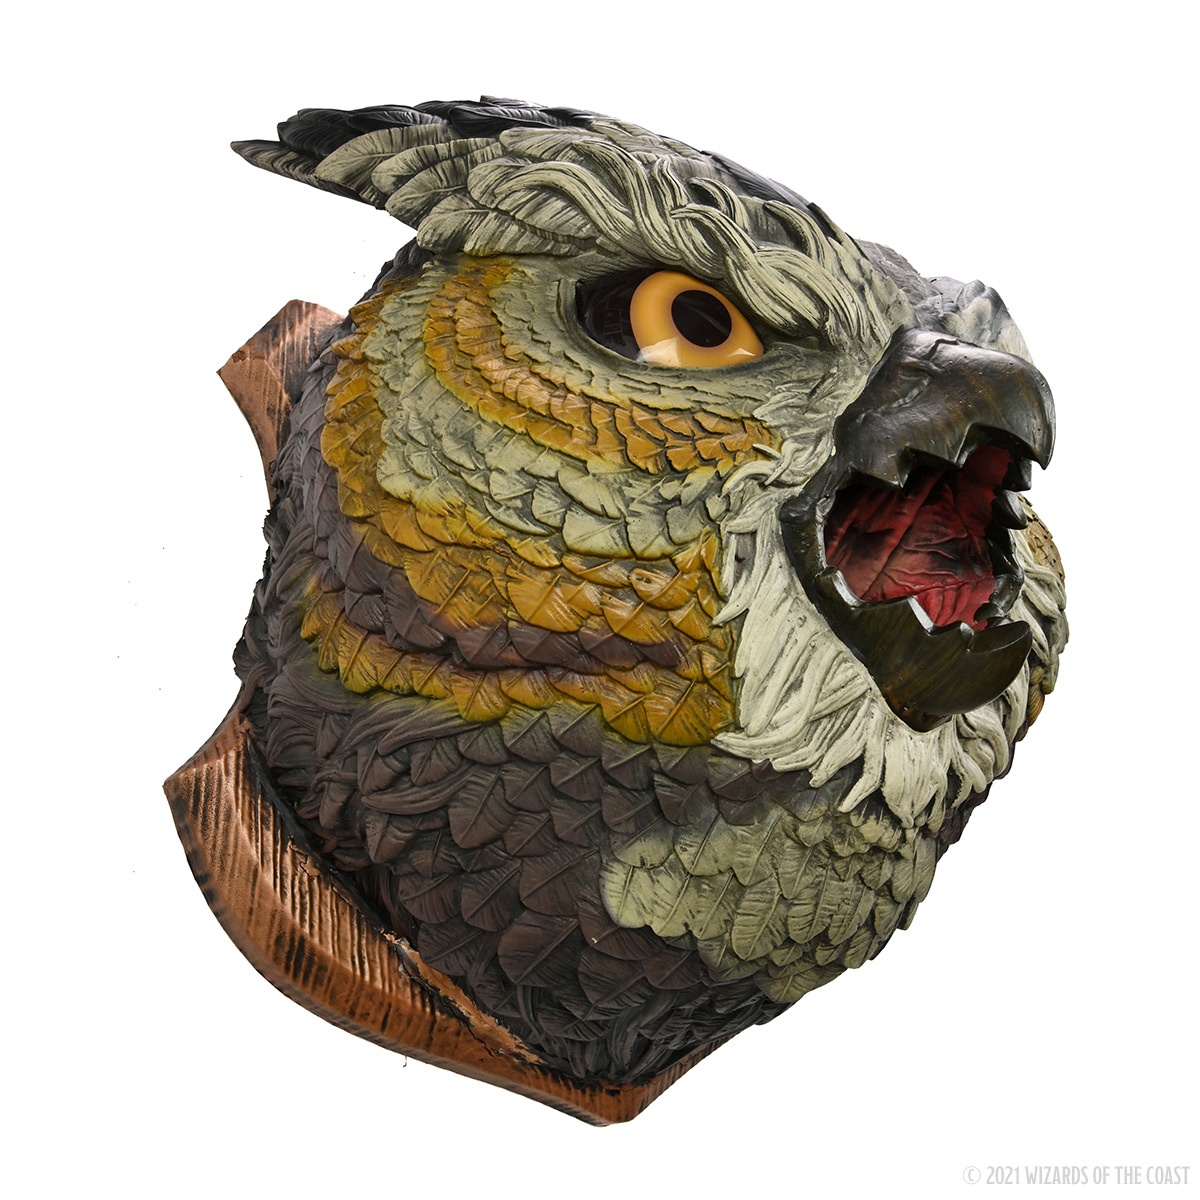 Dungeons & Dragons Owlbear Trophy Plaque-1641462983.jpg